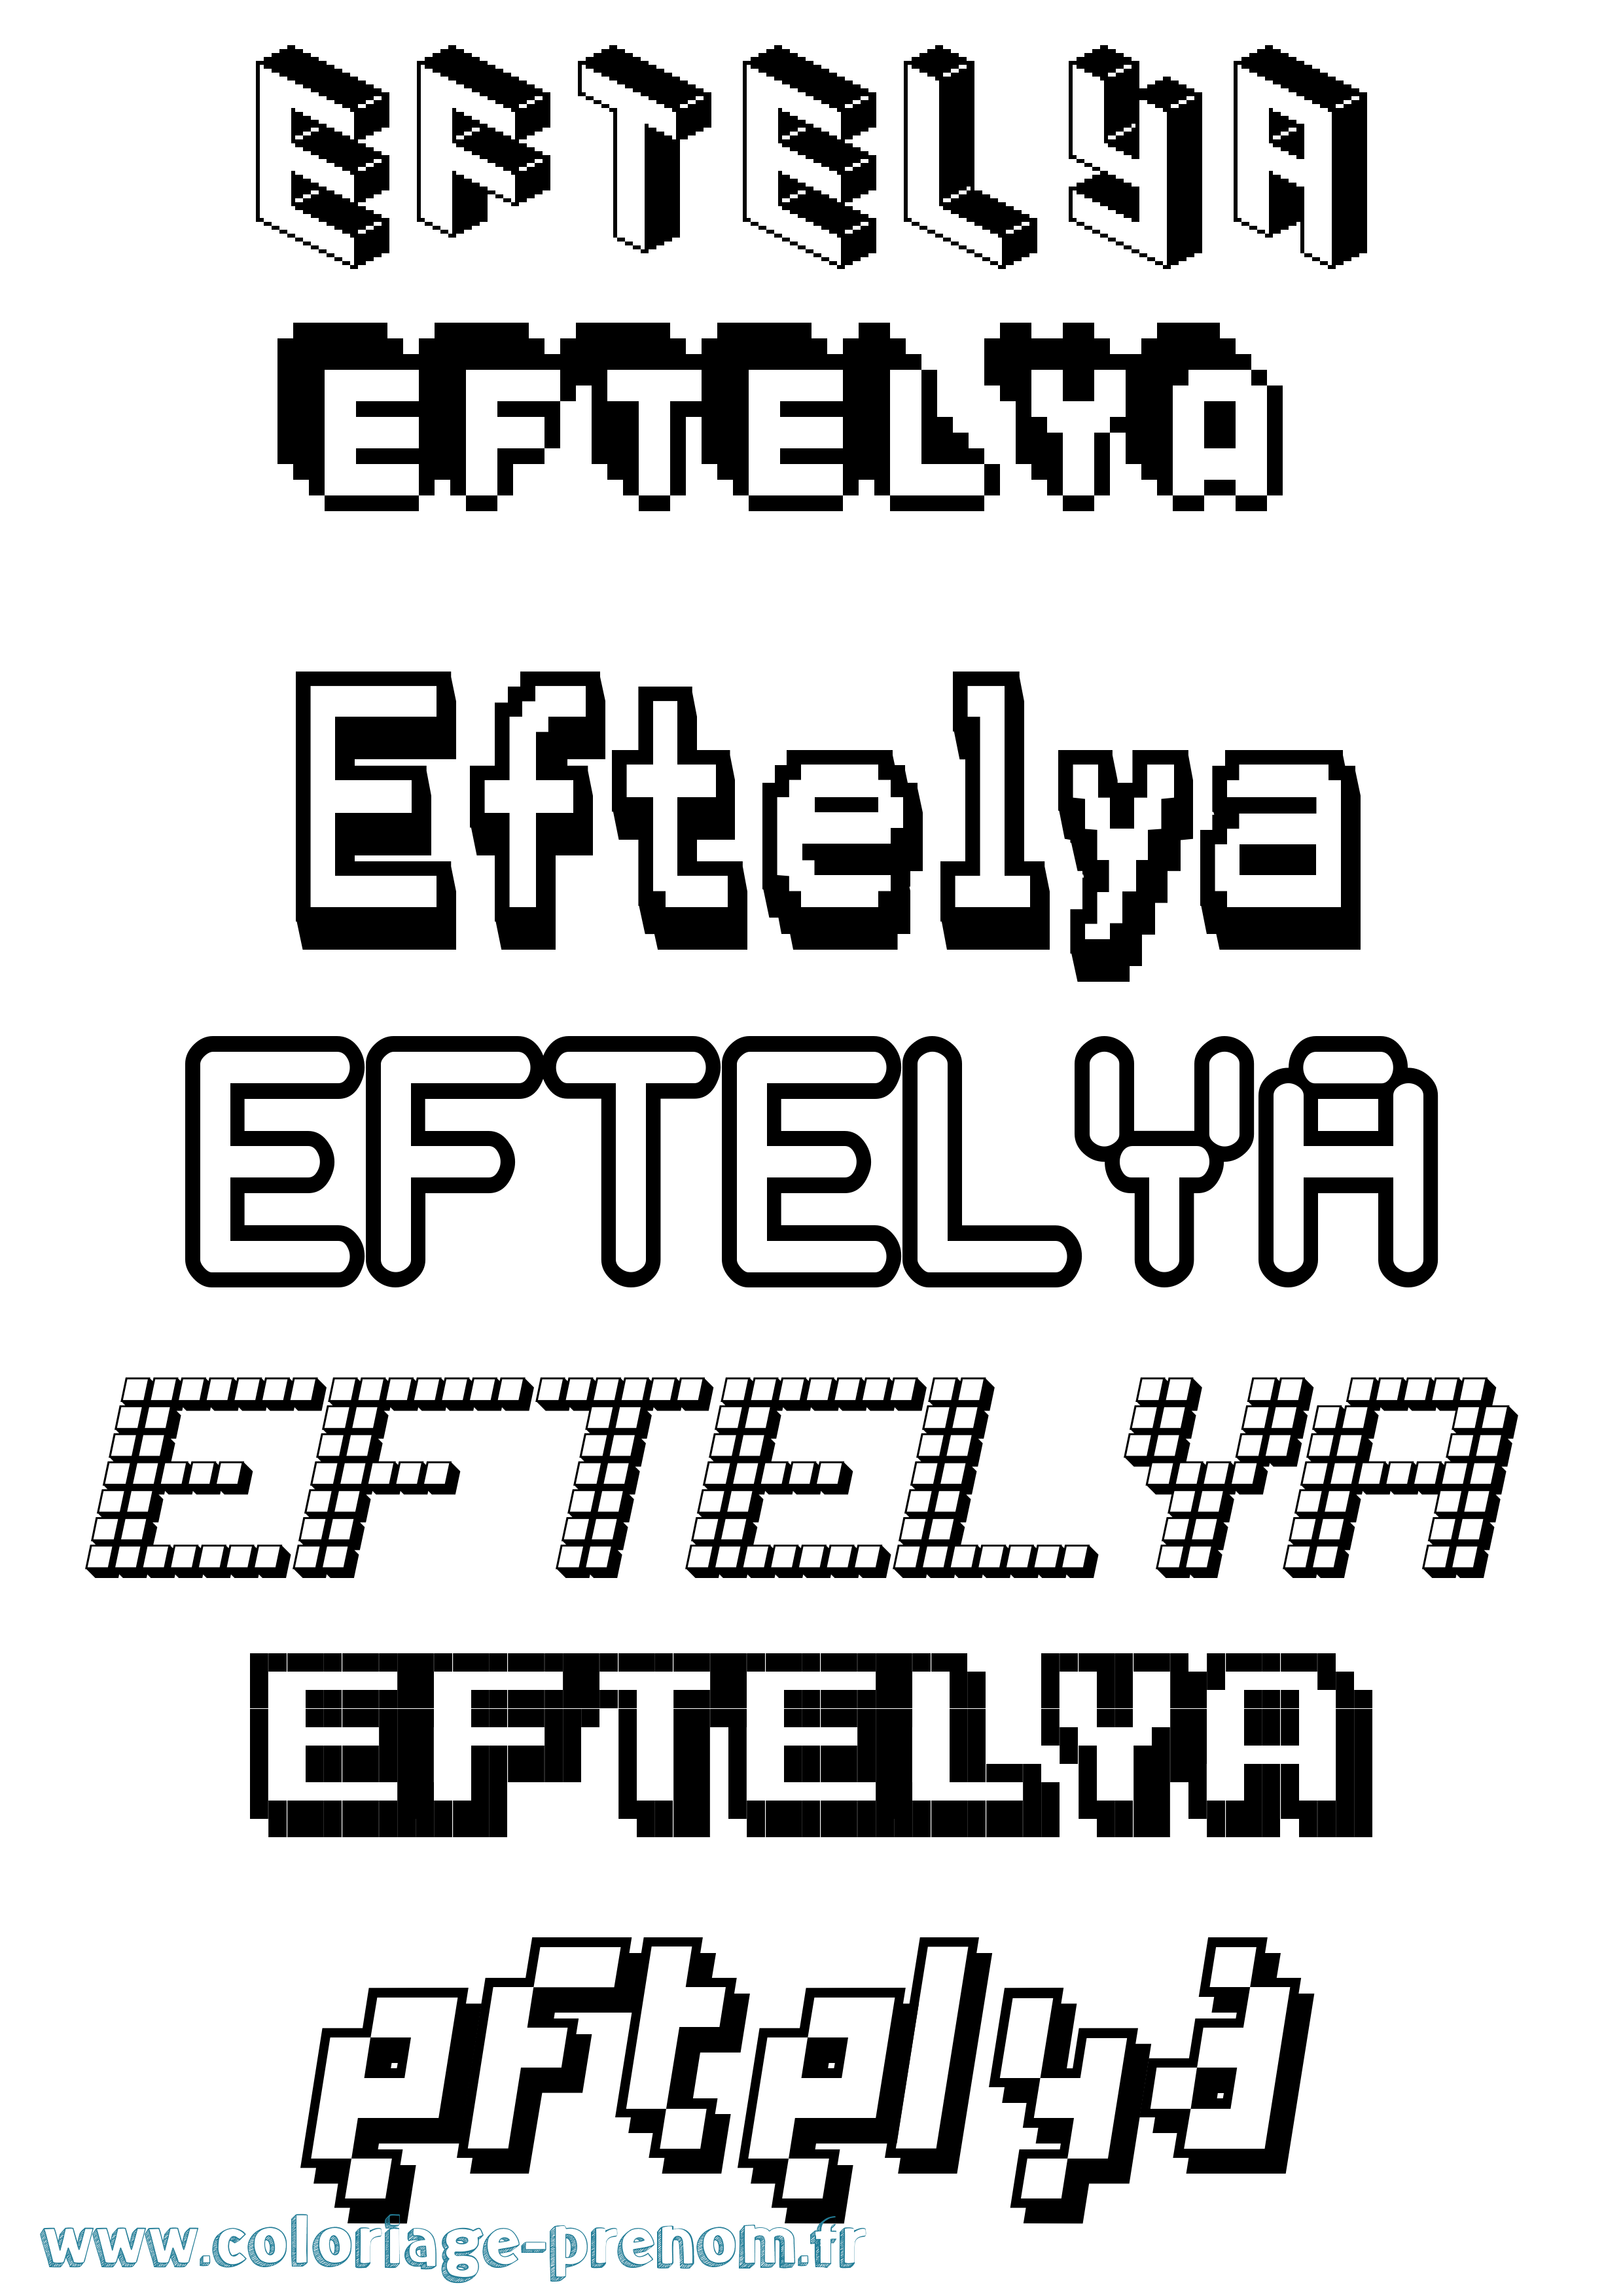 Coloriage prénom Eftelya Pixel